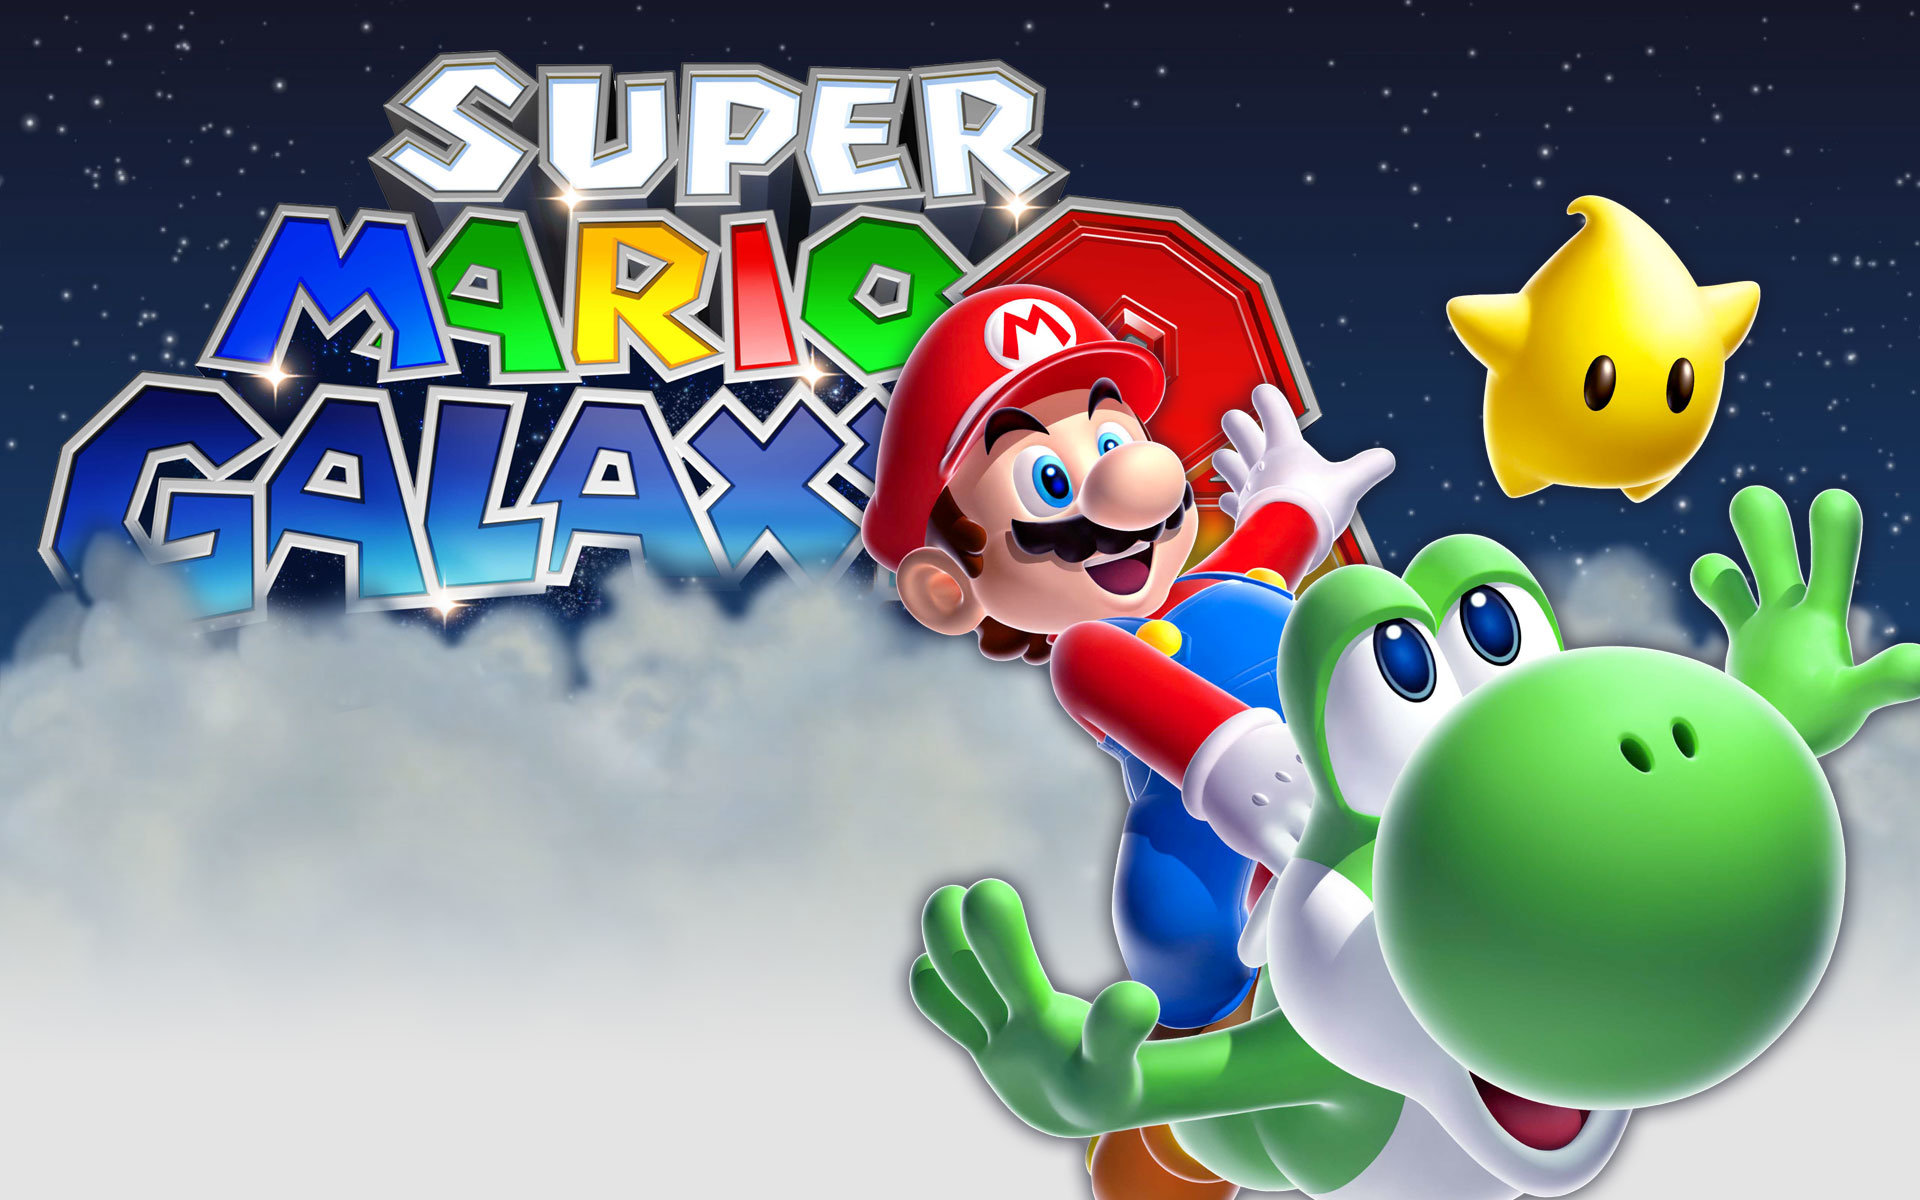 Download hd 1920x1200 Super Mario Galaxy 2 desktop background ID:7745 for free